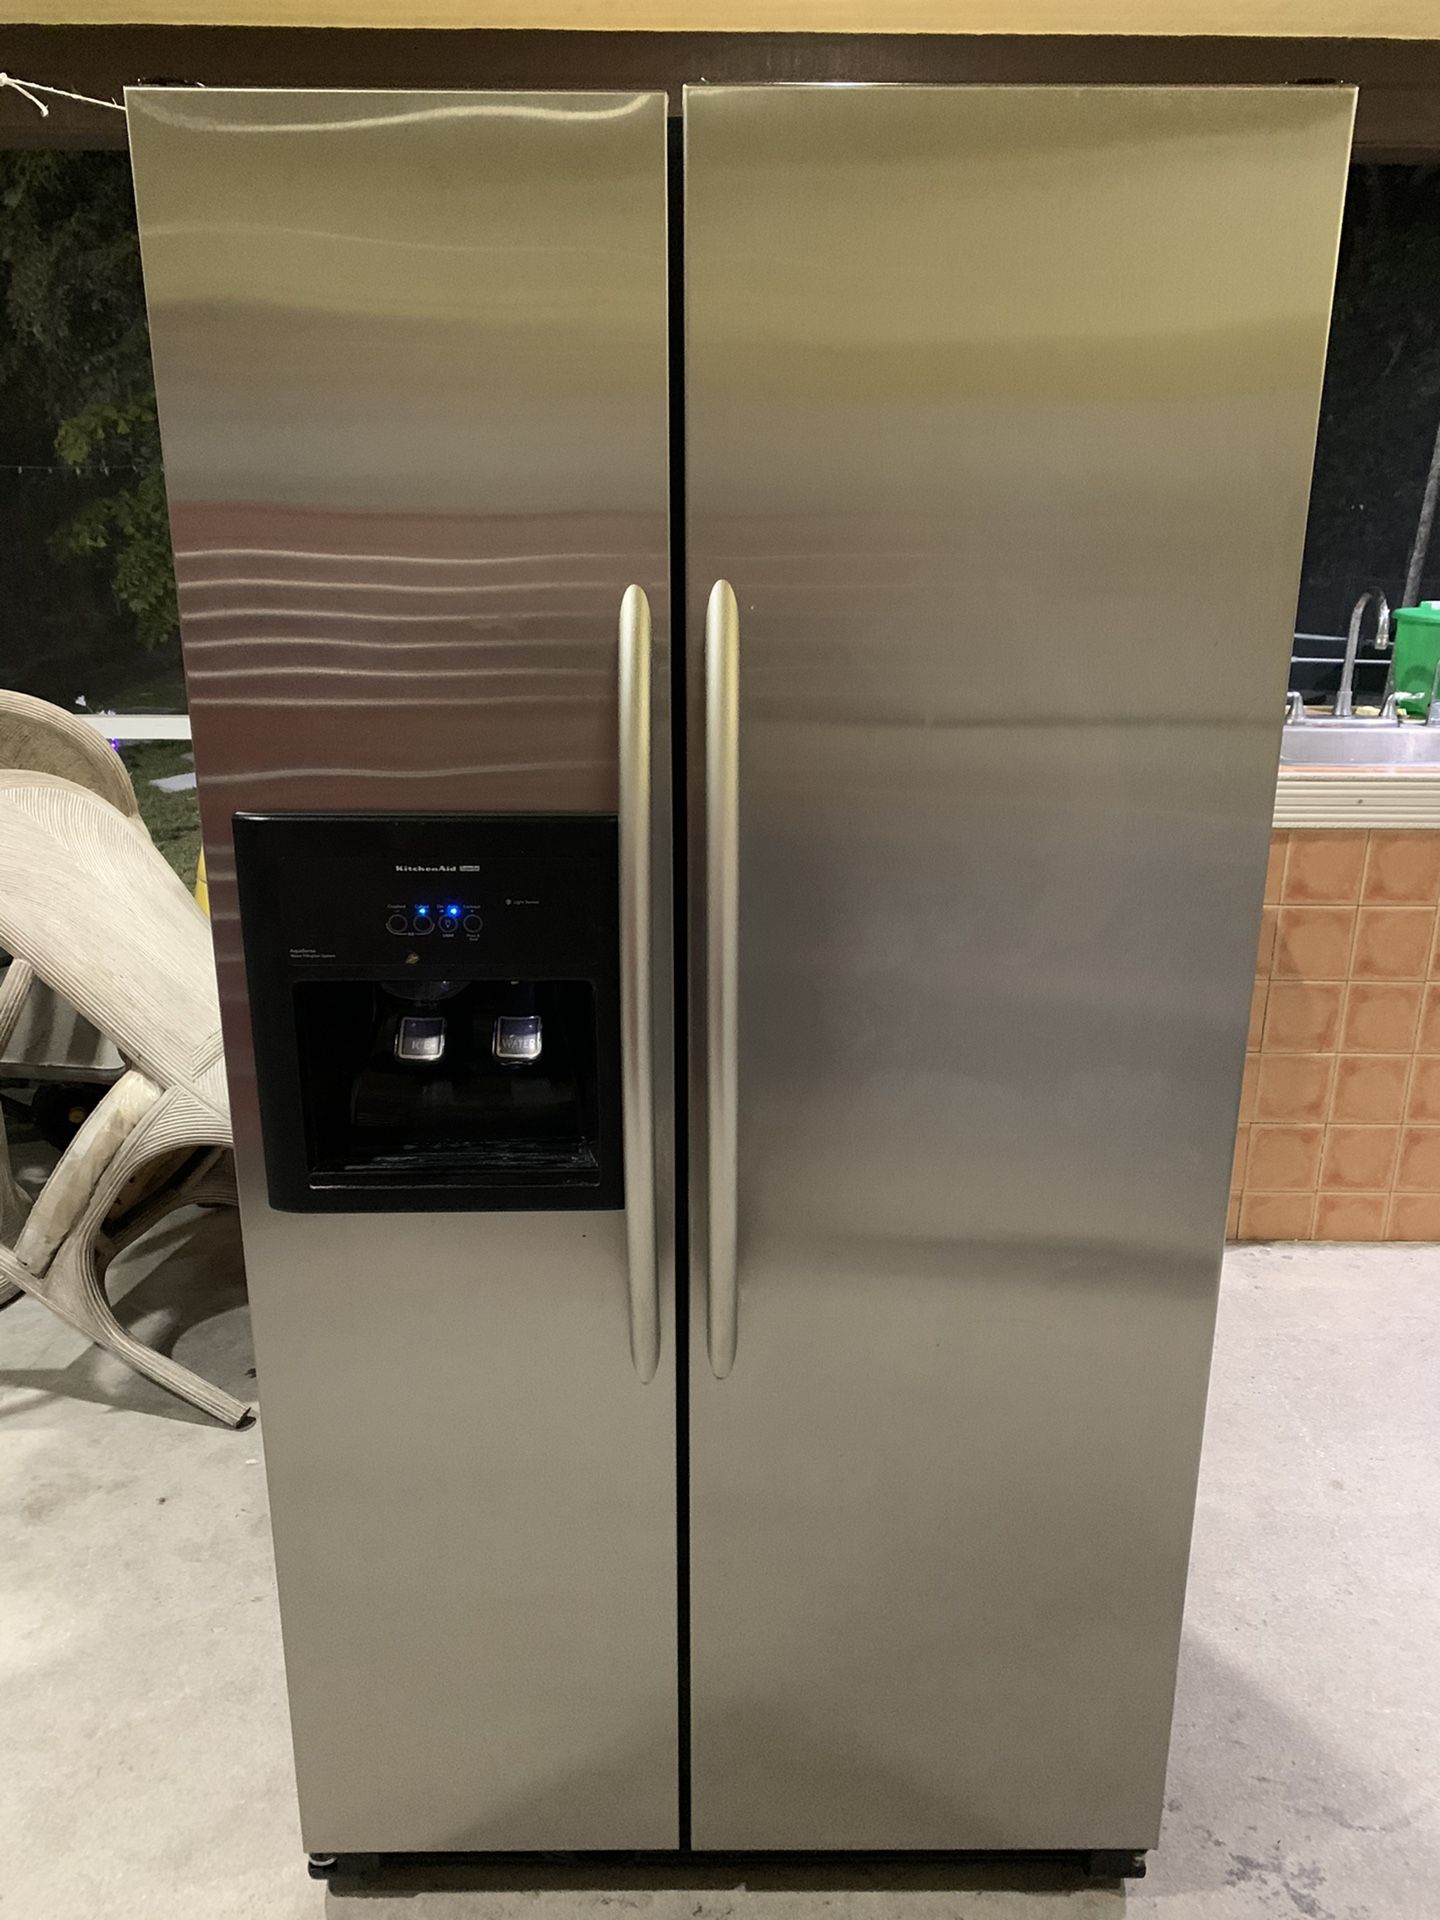 KitchenAid Superba Stainless Steel Refrigerator Fridge 36”W x 69”H x 30”D Works Perfect